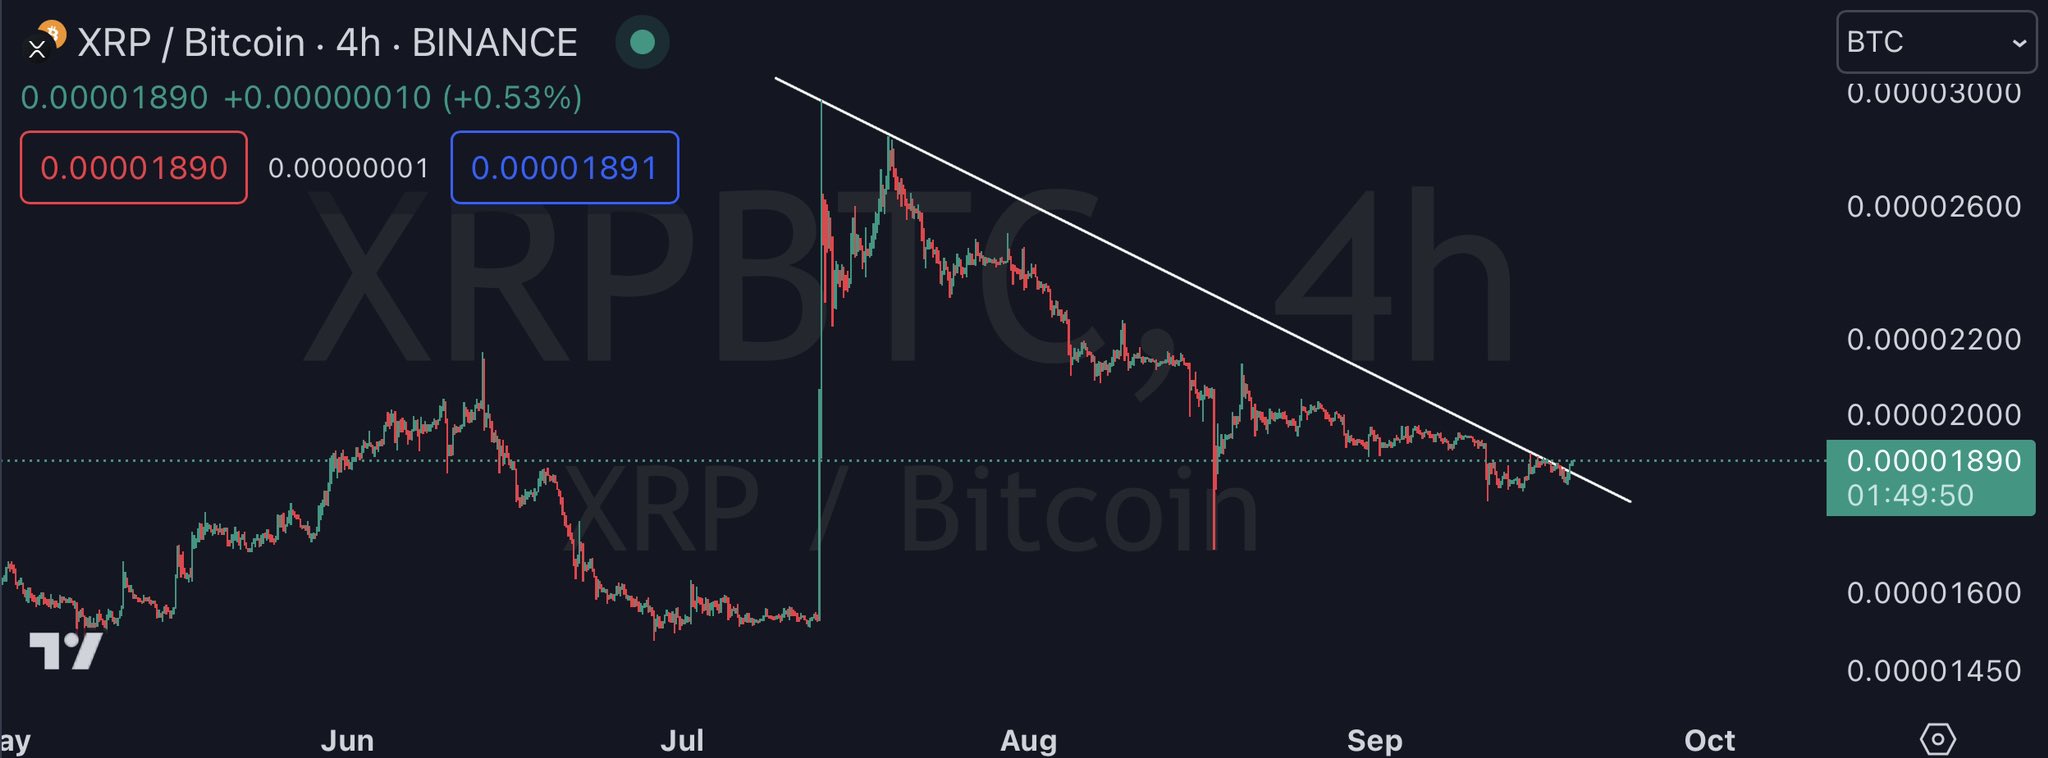 XRP/BTC four-hour price chart